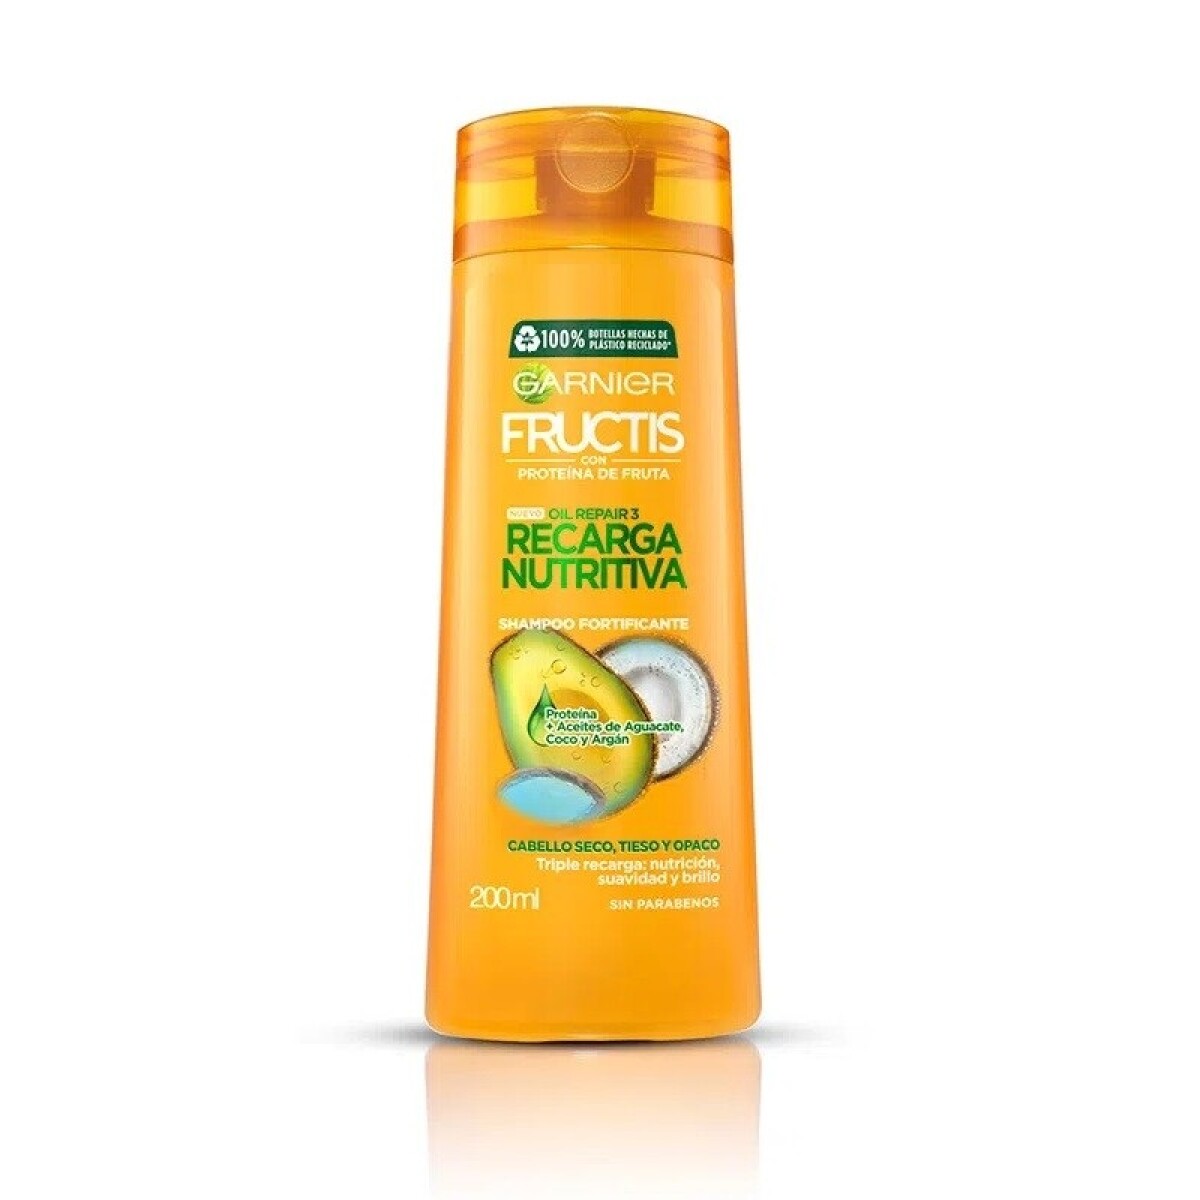 Shampoo Fructis Oil Repair Recarga Nutritiva 200ml 